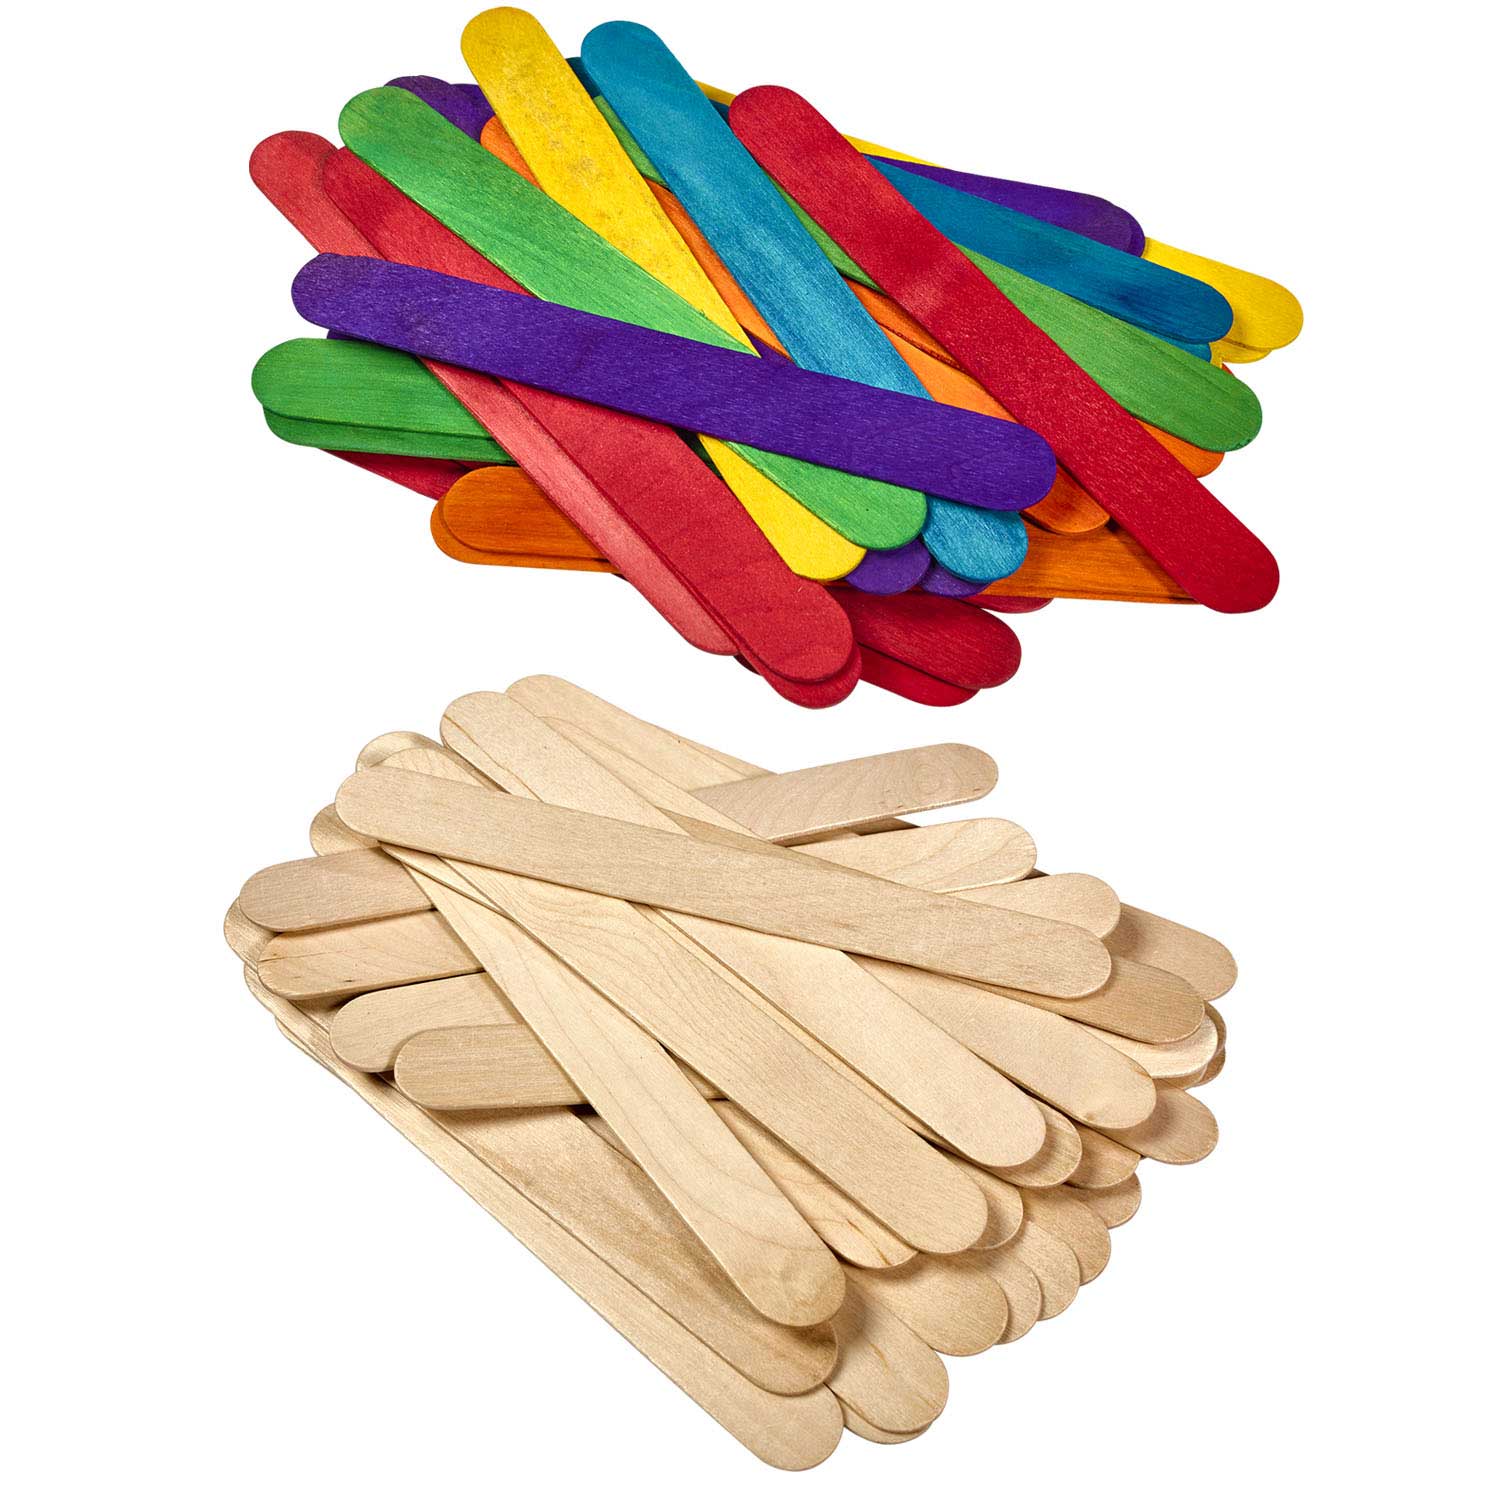 Jumbo Orange Craft Sticks Wholesale Wooden Sticks at CraftySticks